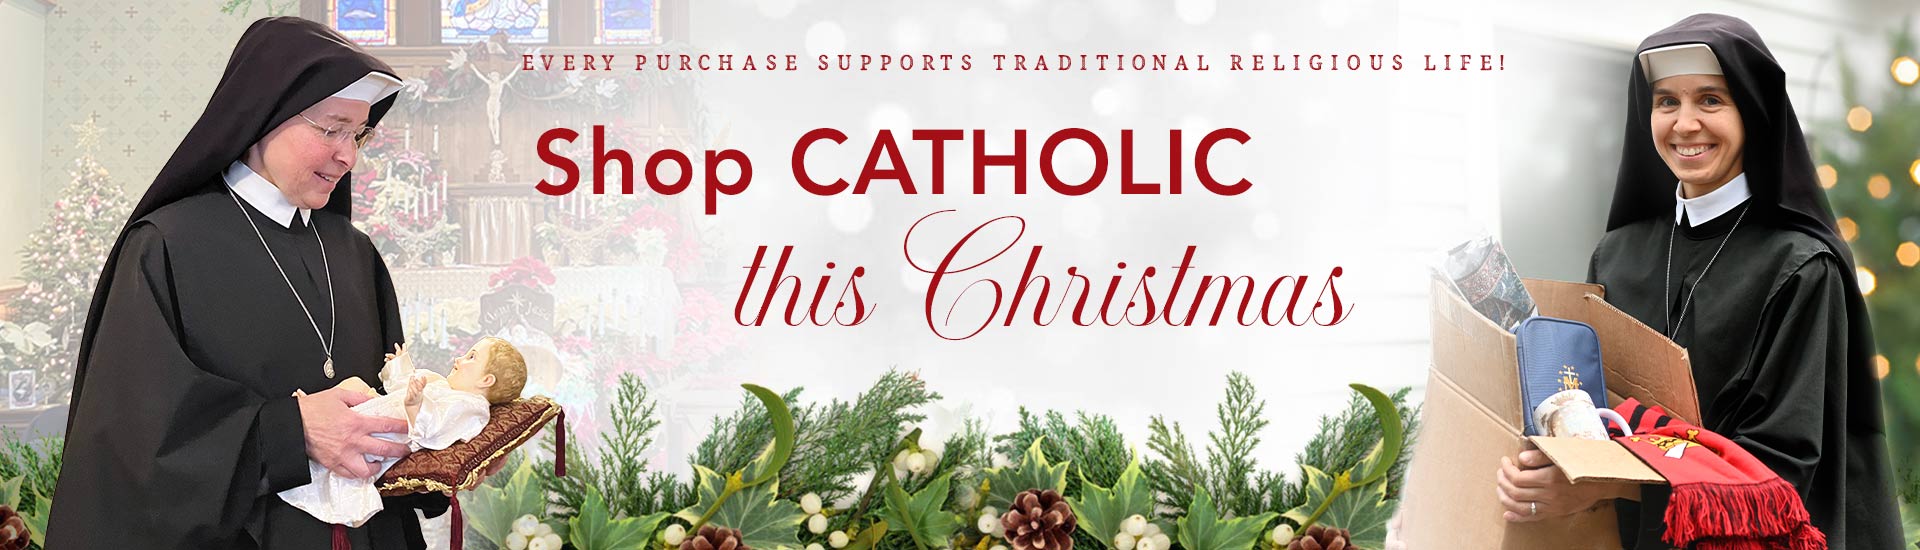 Shop Catholic this Christmas at True Devotionals.